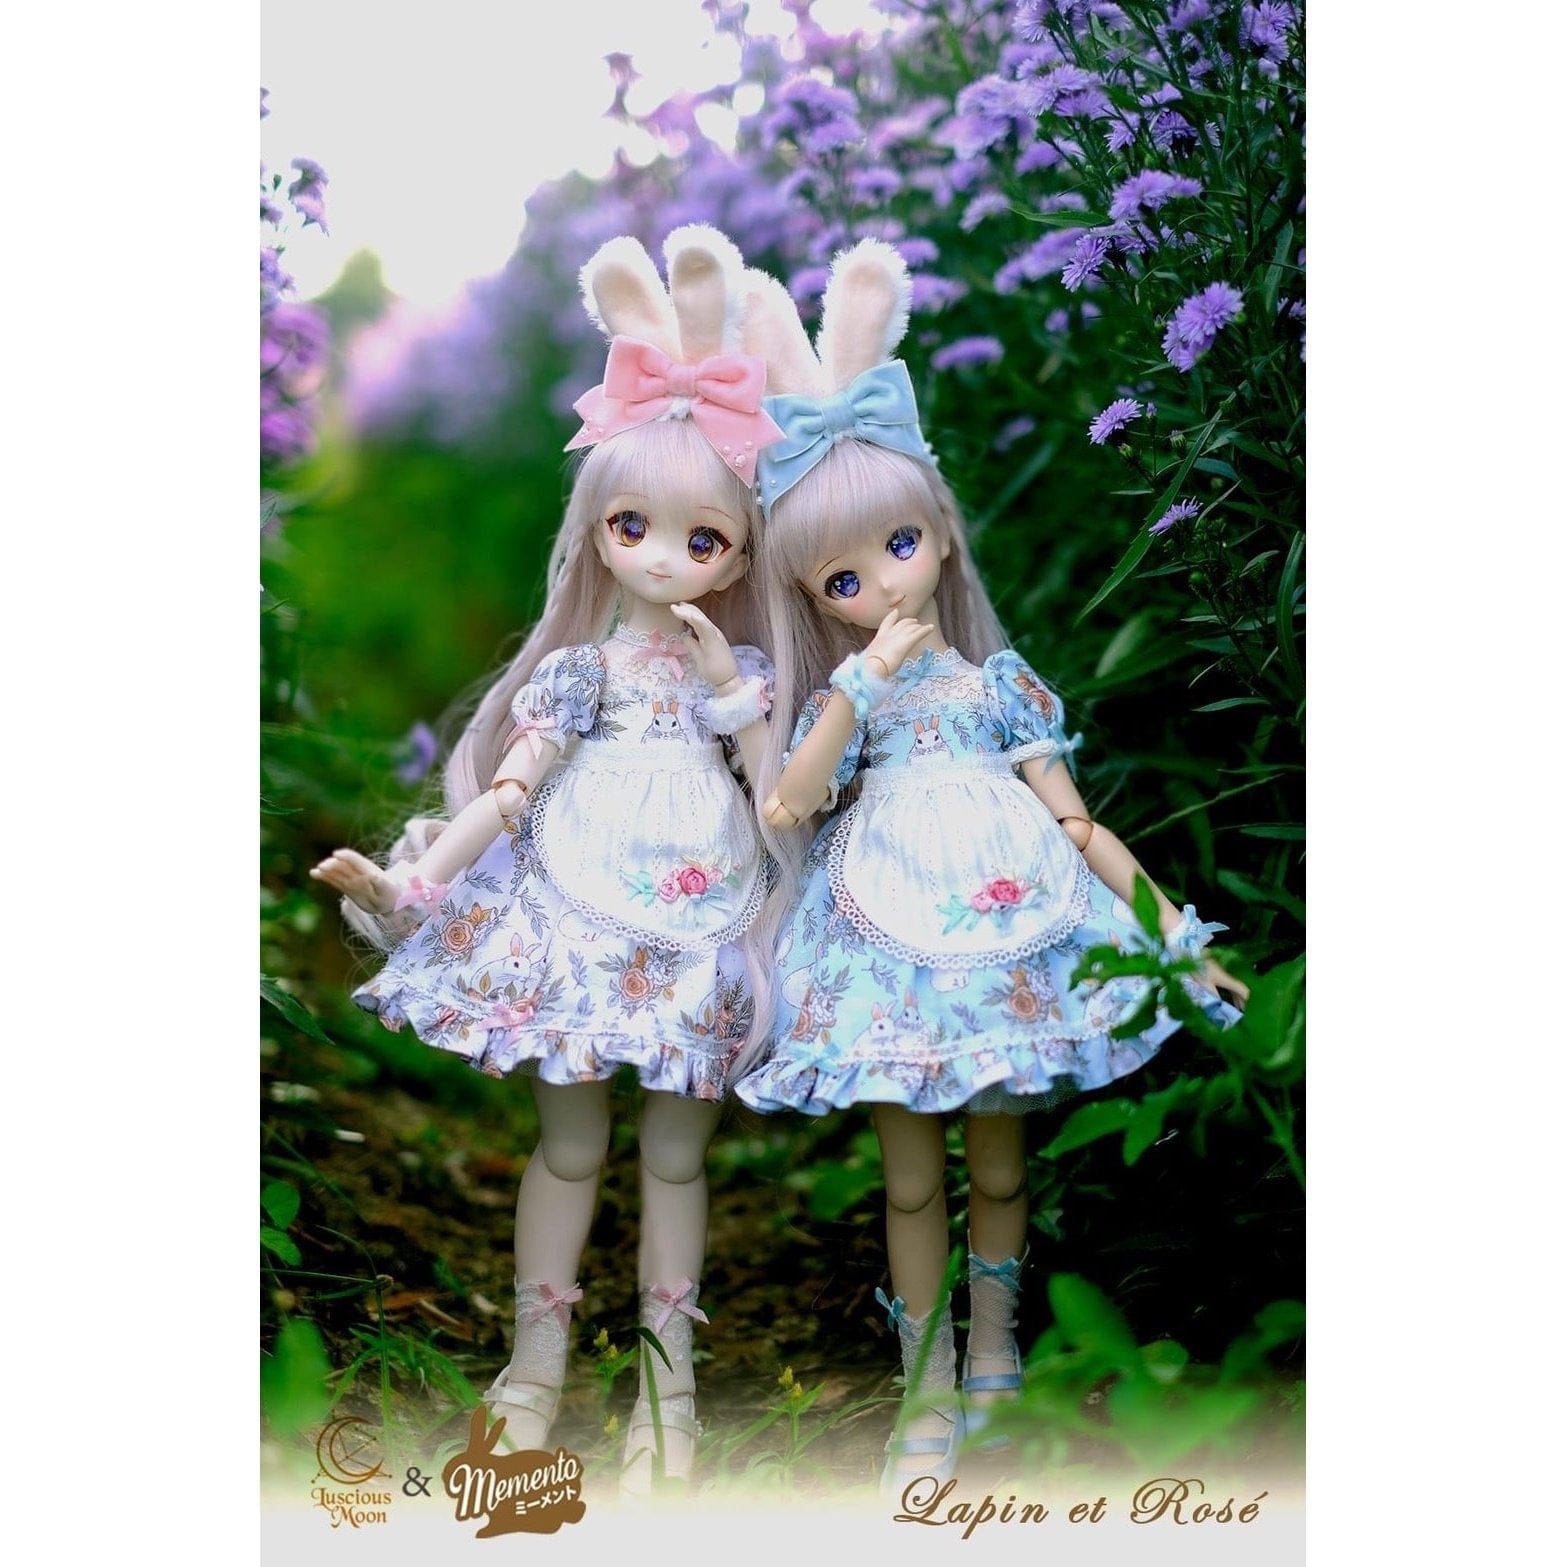 【Luscious Moon × Memento】Lapin et Rosé 兔子玫瑰洋裝套組 現貨預購 / BJD 4分 MDD 熊妹 iMda 4.3